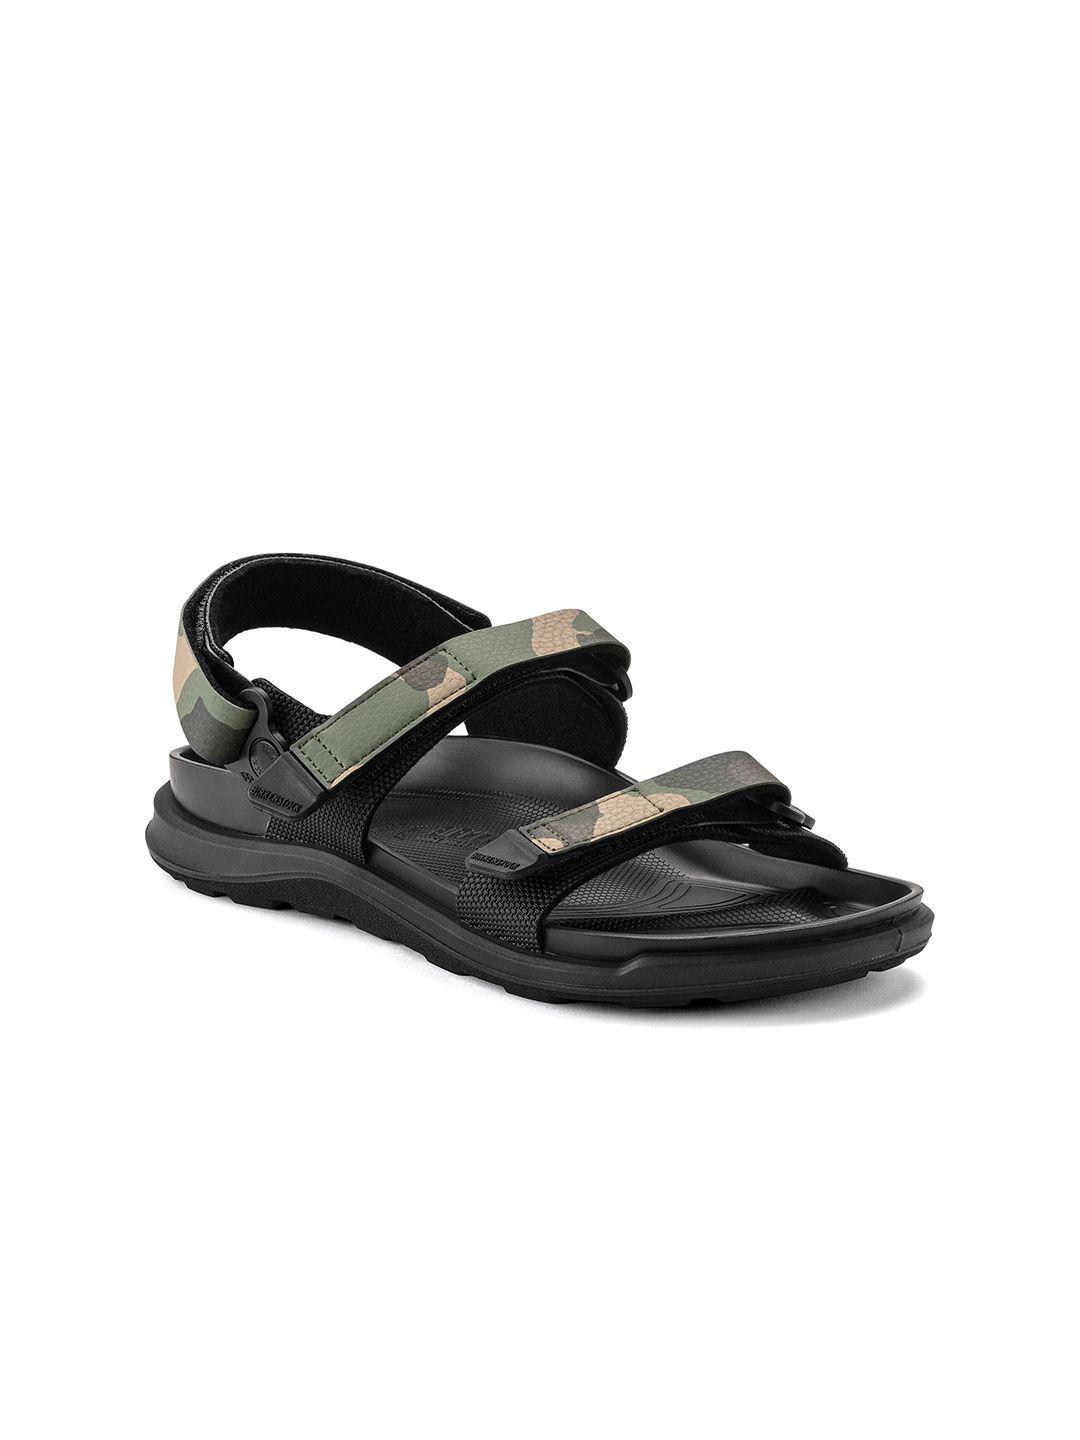 birkenstock women kalahari regular width birko-flor sports sandals with ankle strap